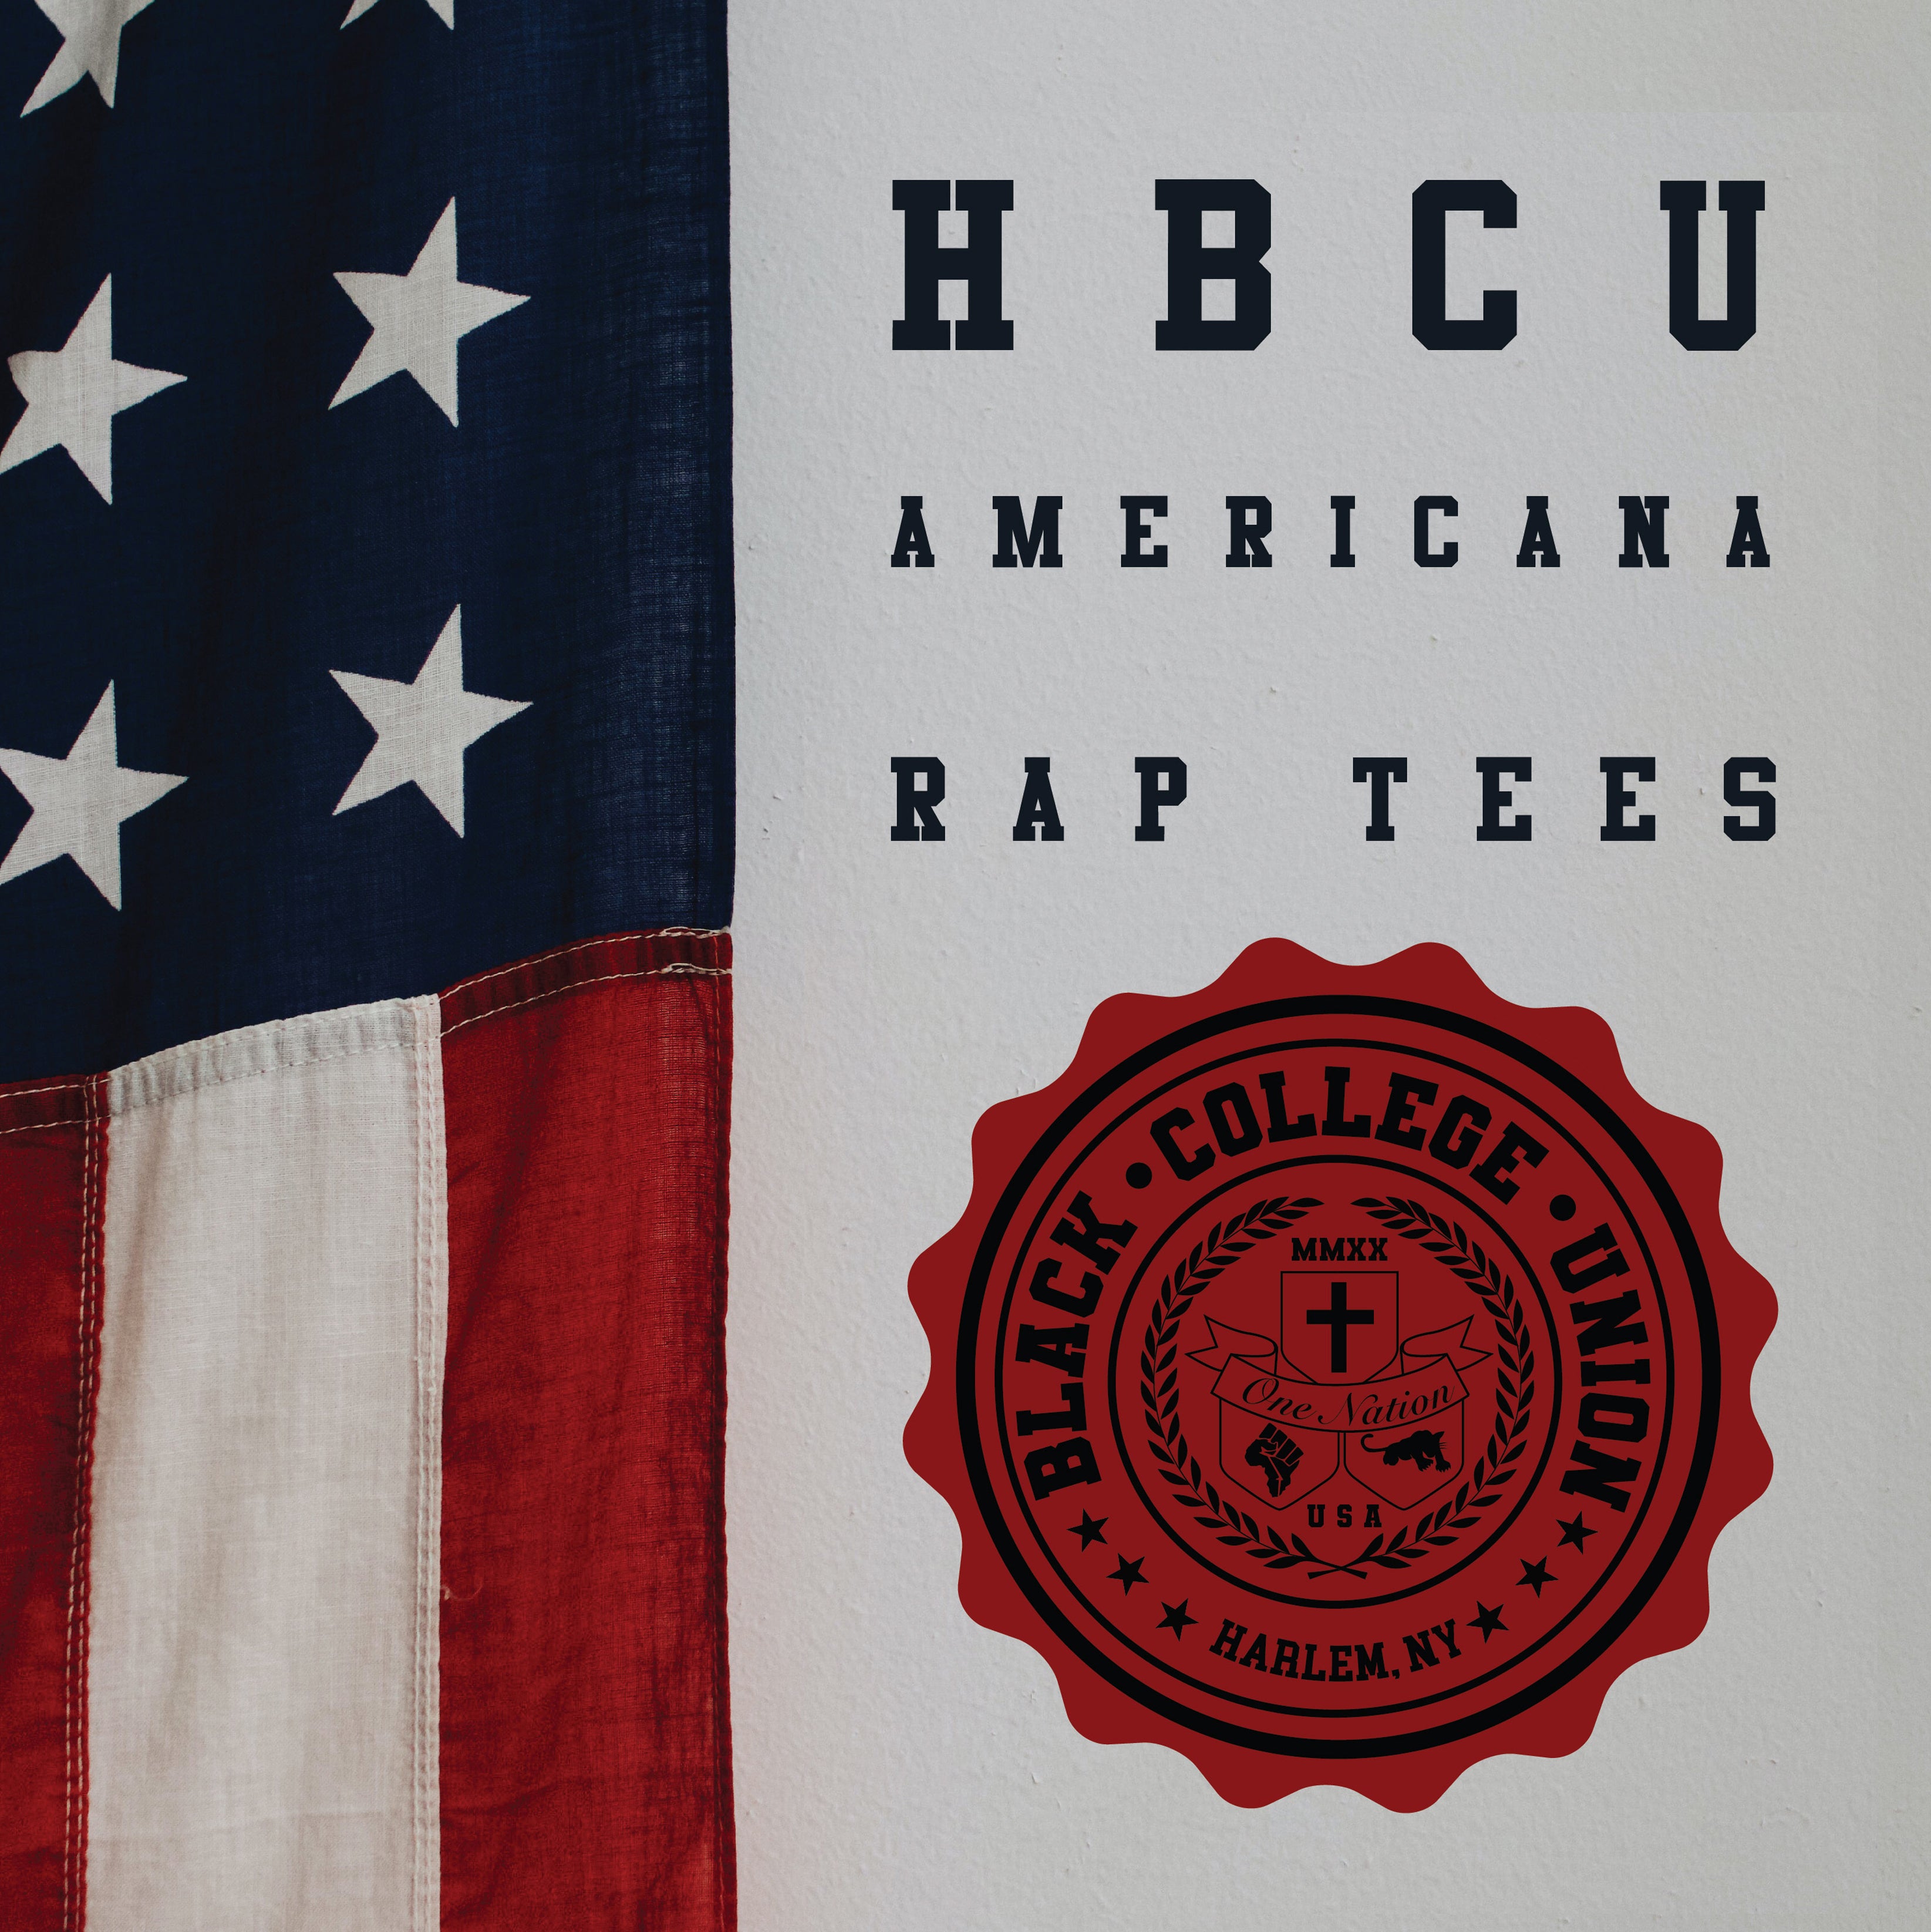 BCU X Champion Original HBCU Americana Rap Tee - Howard